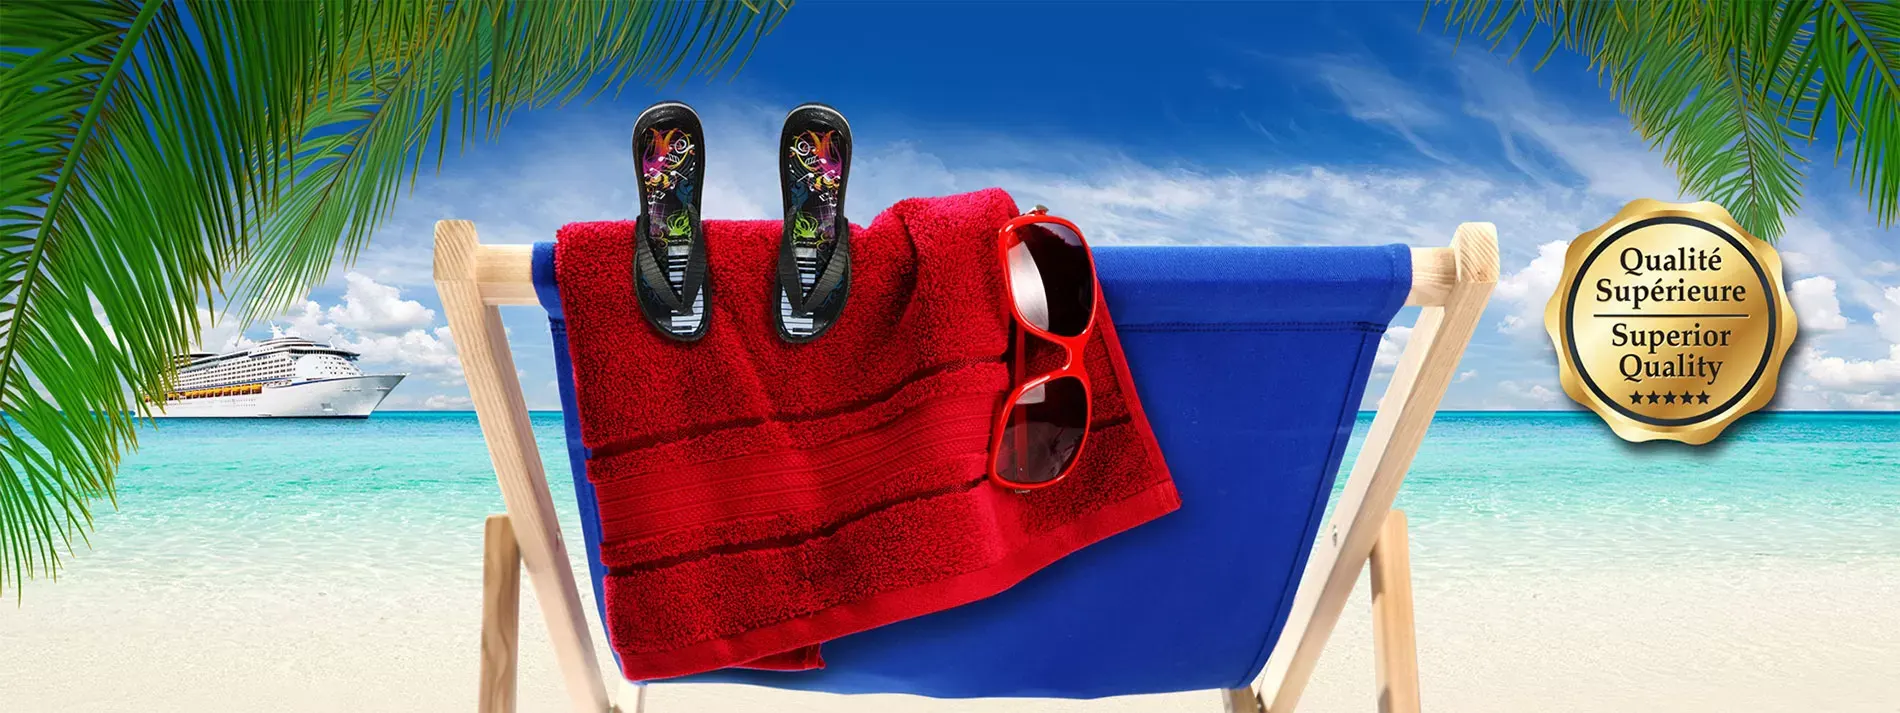 Solclip - Beach towel clips